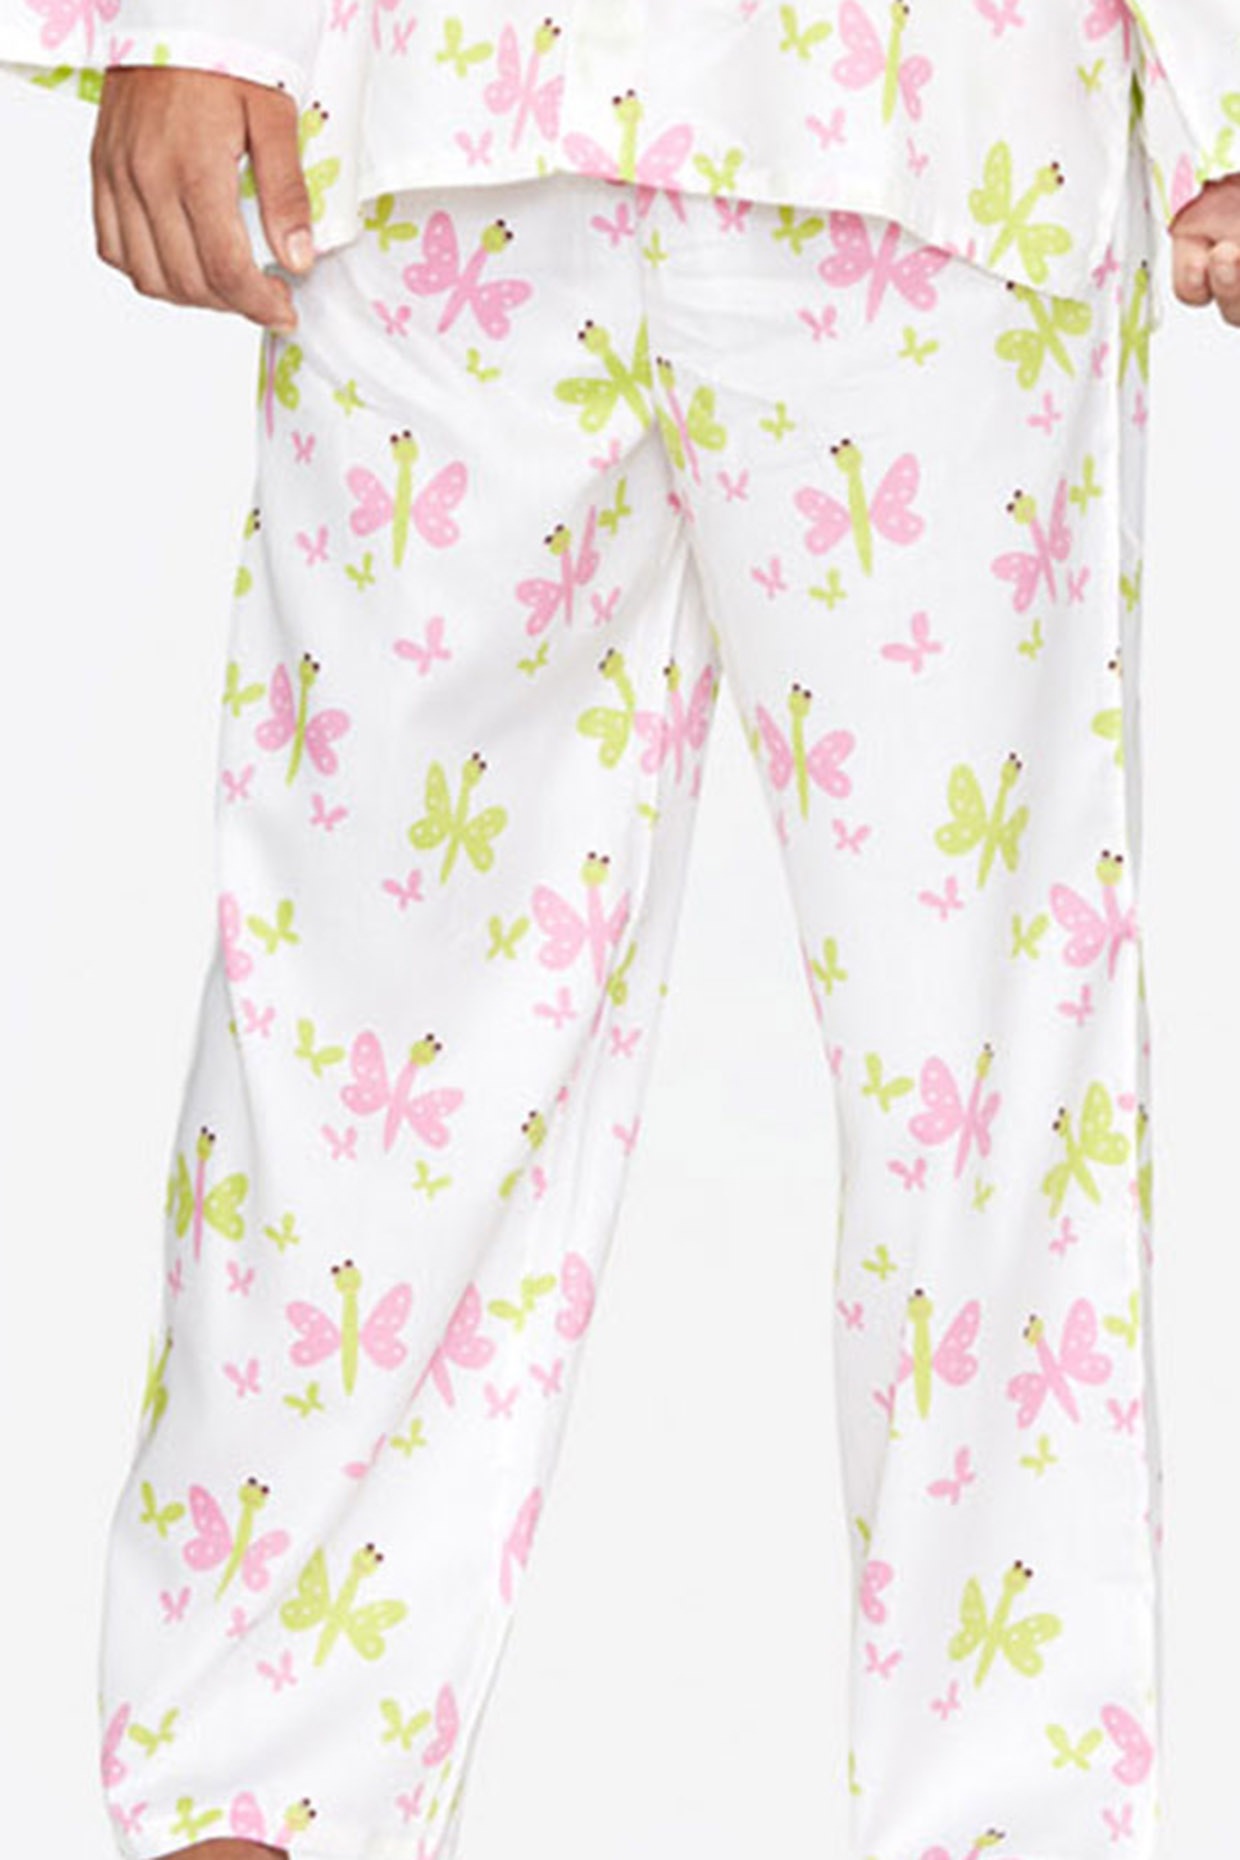 Women & Girls Track Pant Lower Pajama Cotton Printed Lounge Wear Soft Cotton  Night Wear Pajama pack of -5